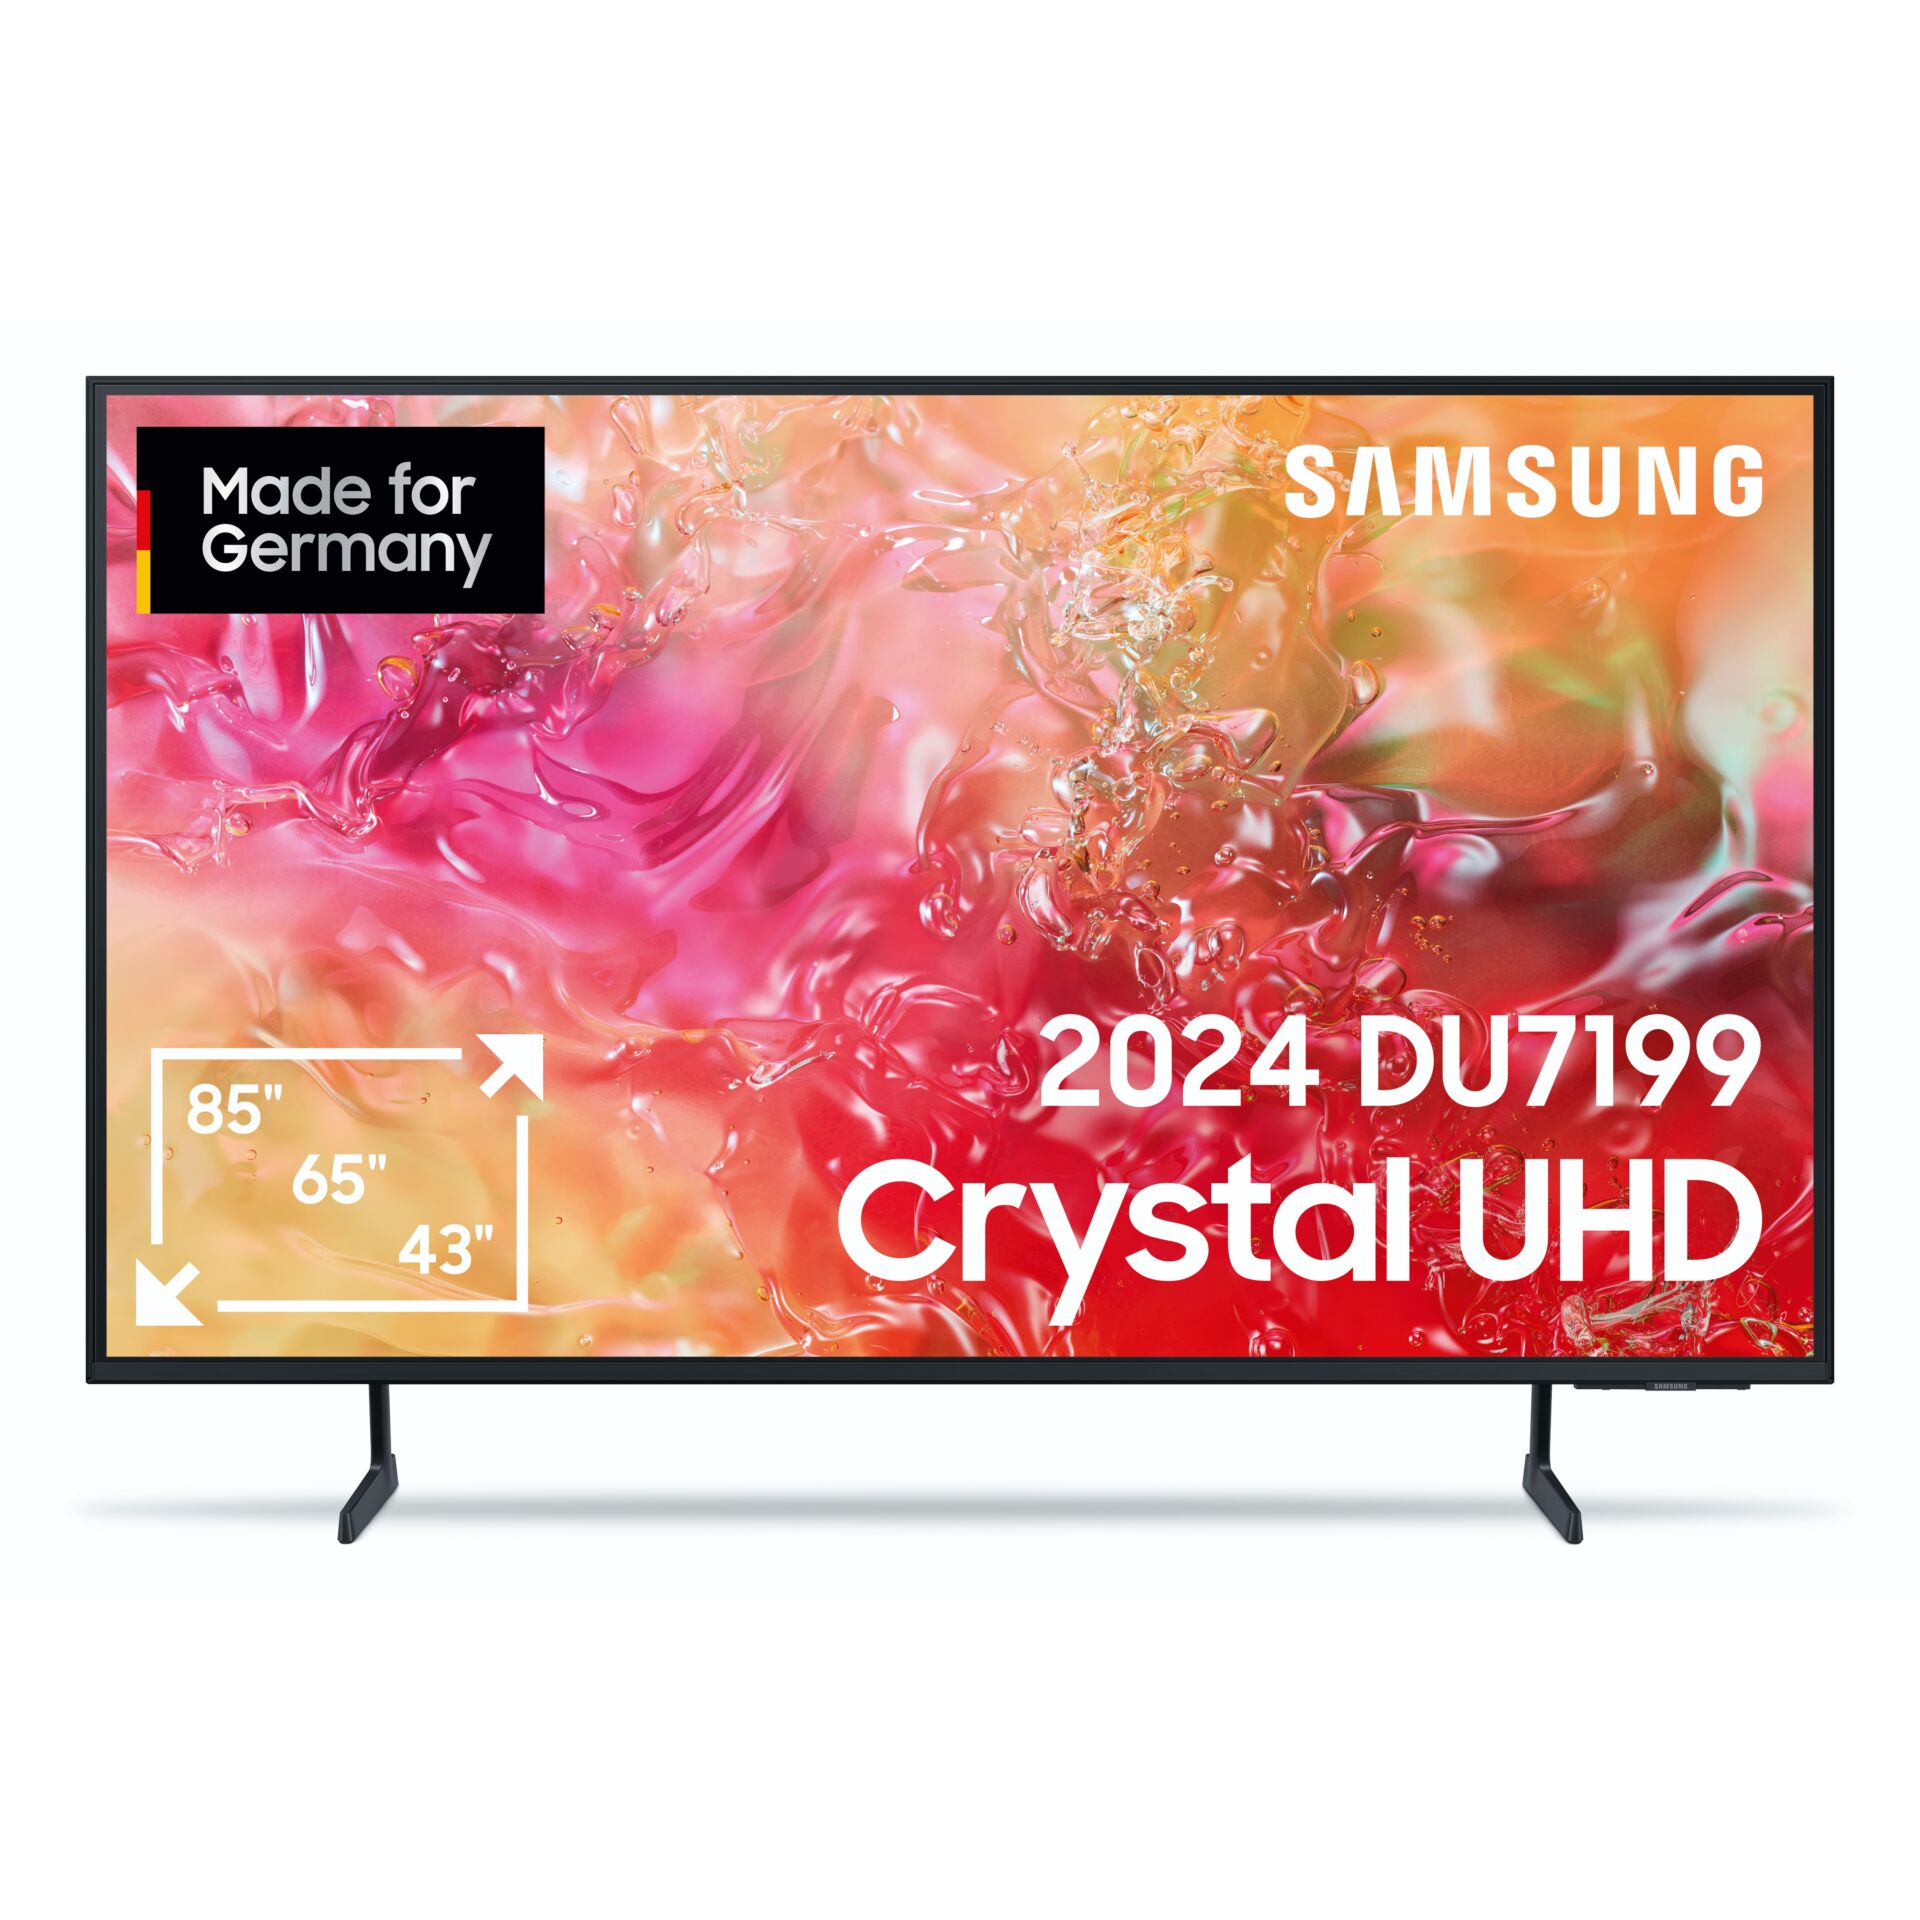 Samsung 50 Crystal UHD 4K DU7199 Tizen OS Smart TV (2024)